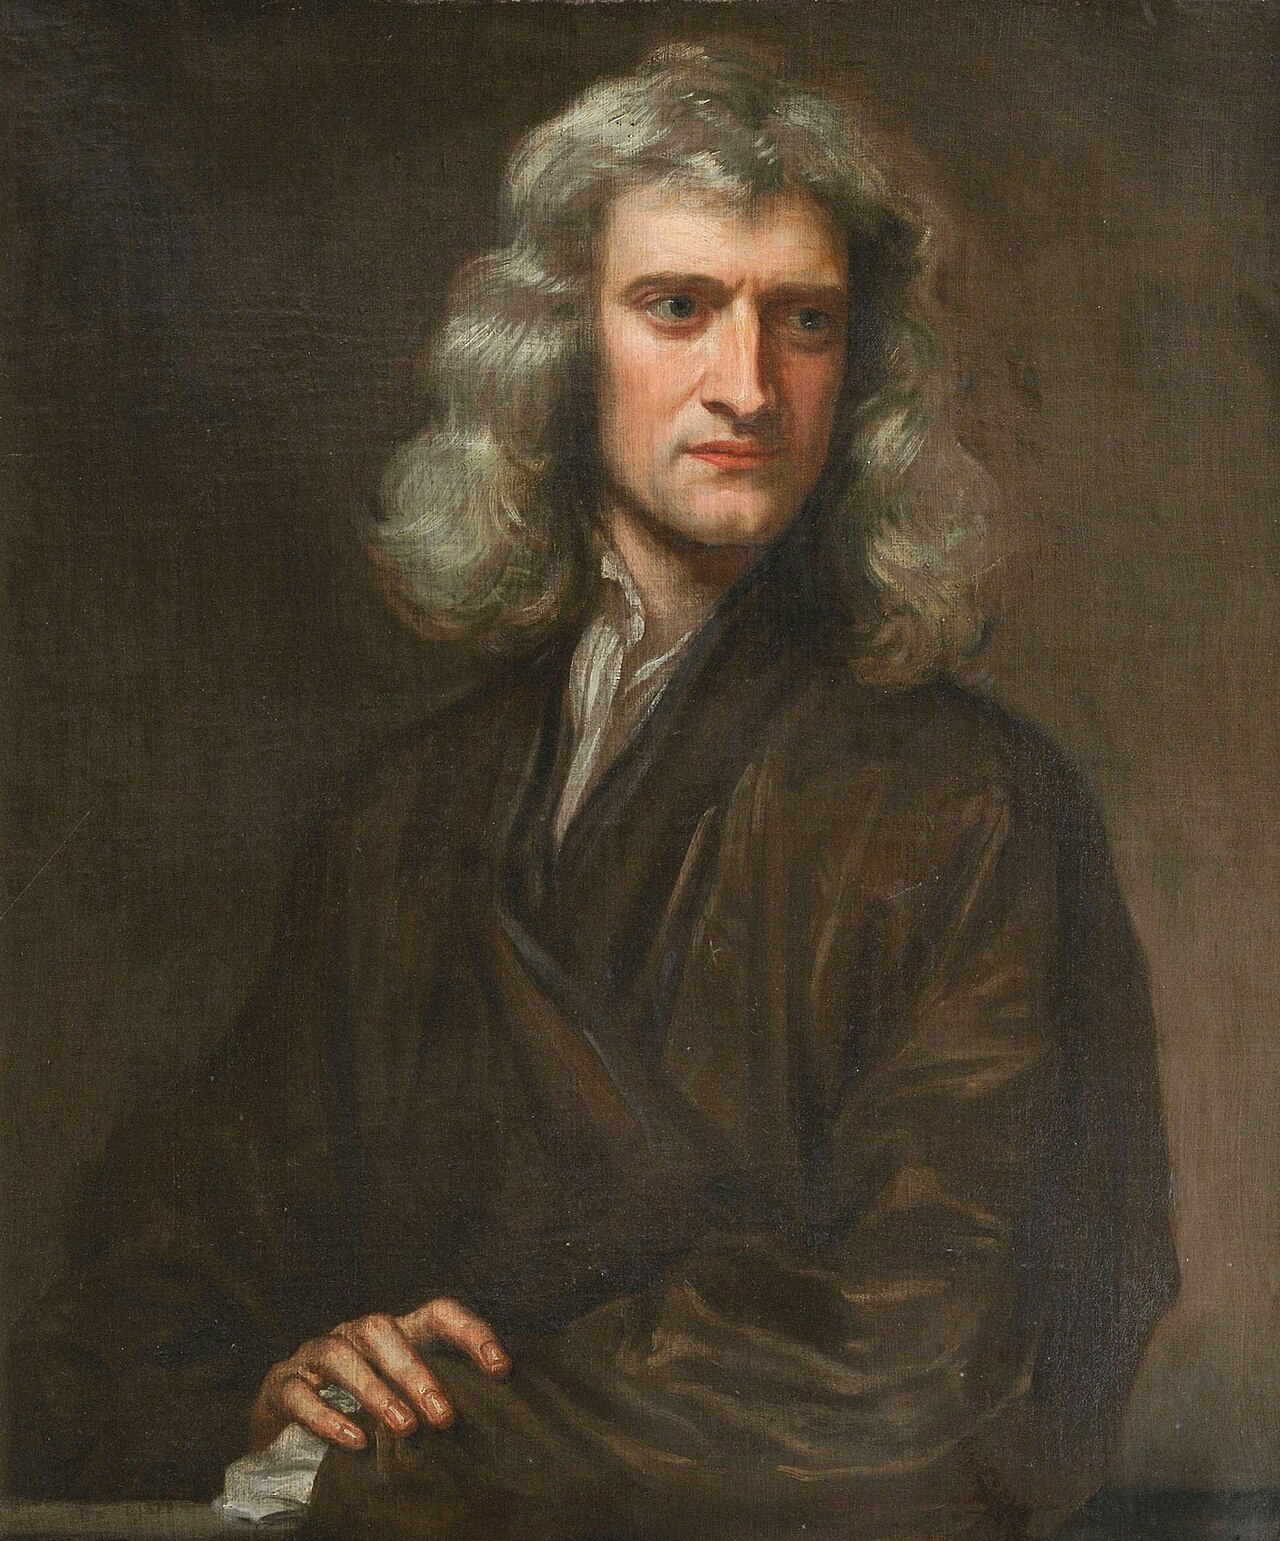 Portrait_of_Sir_Isaac_Newton,_1689_(brightened).jpg